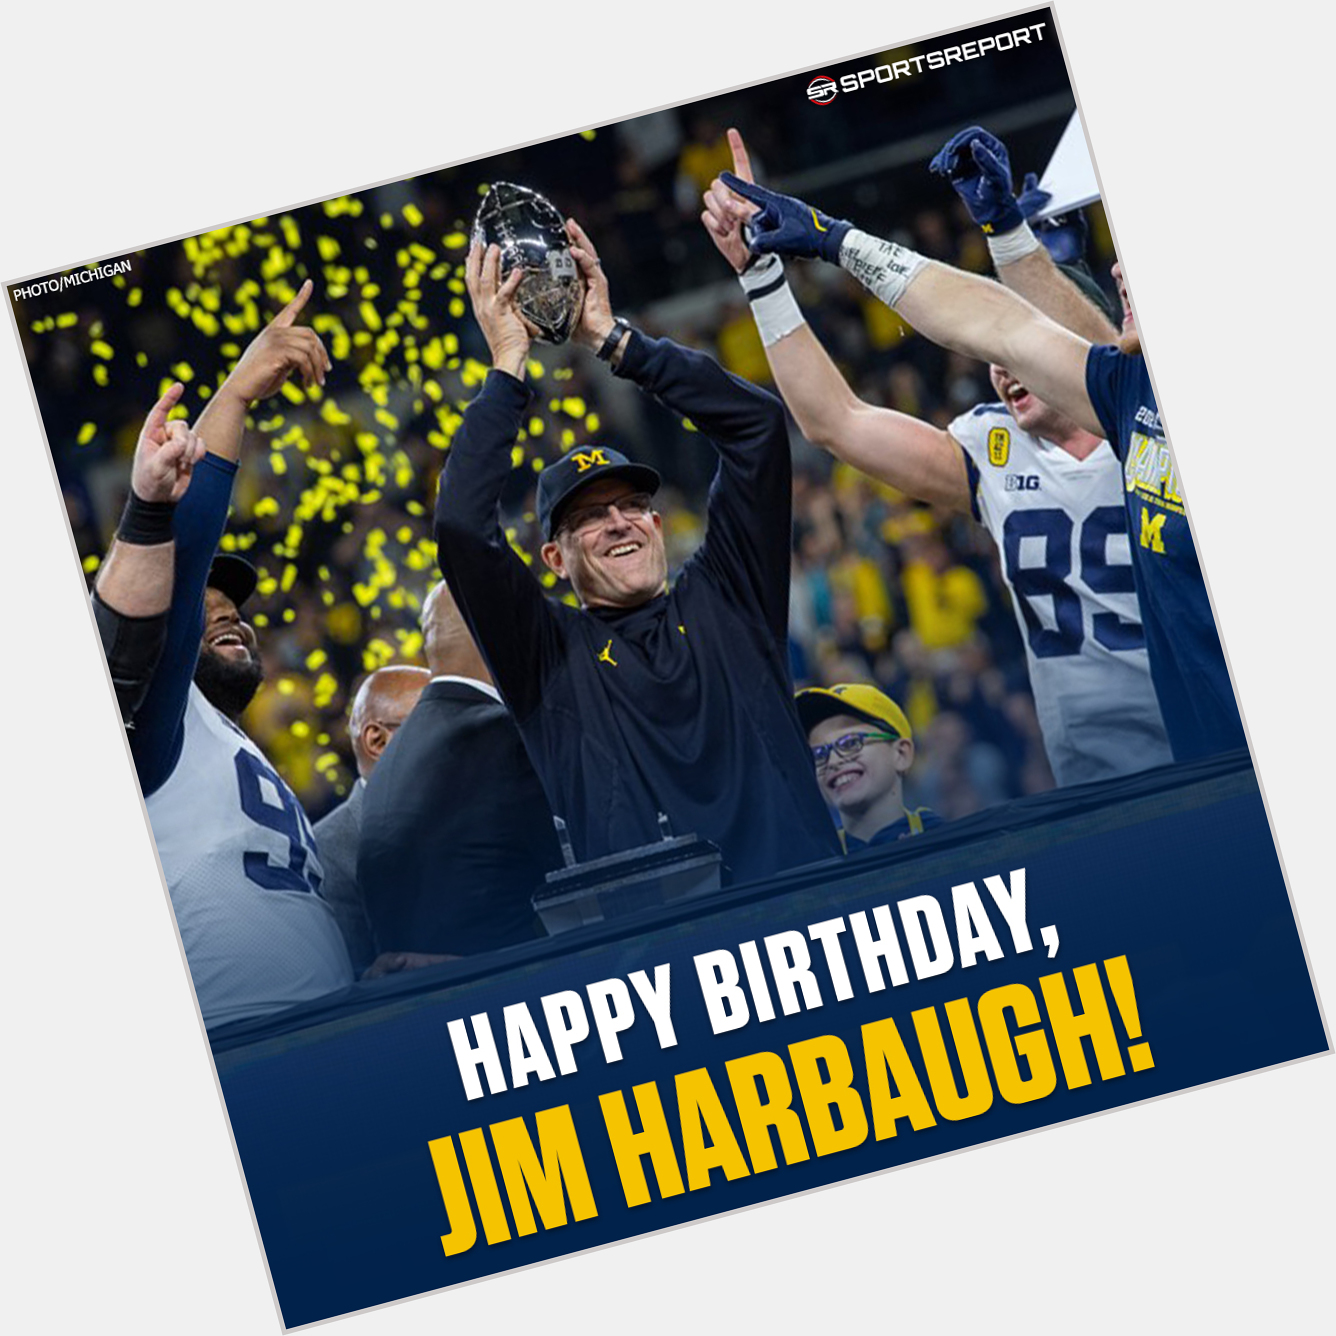  Fans, let\s wish Coach Jim Harbaugh a Happy Birthday!  